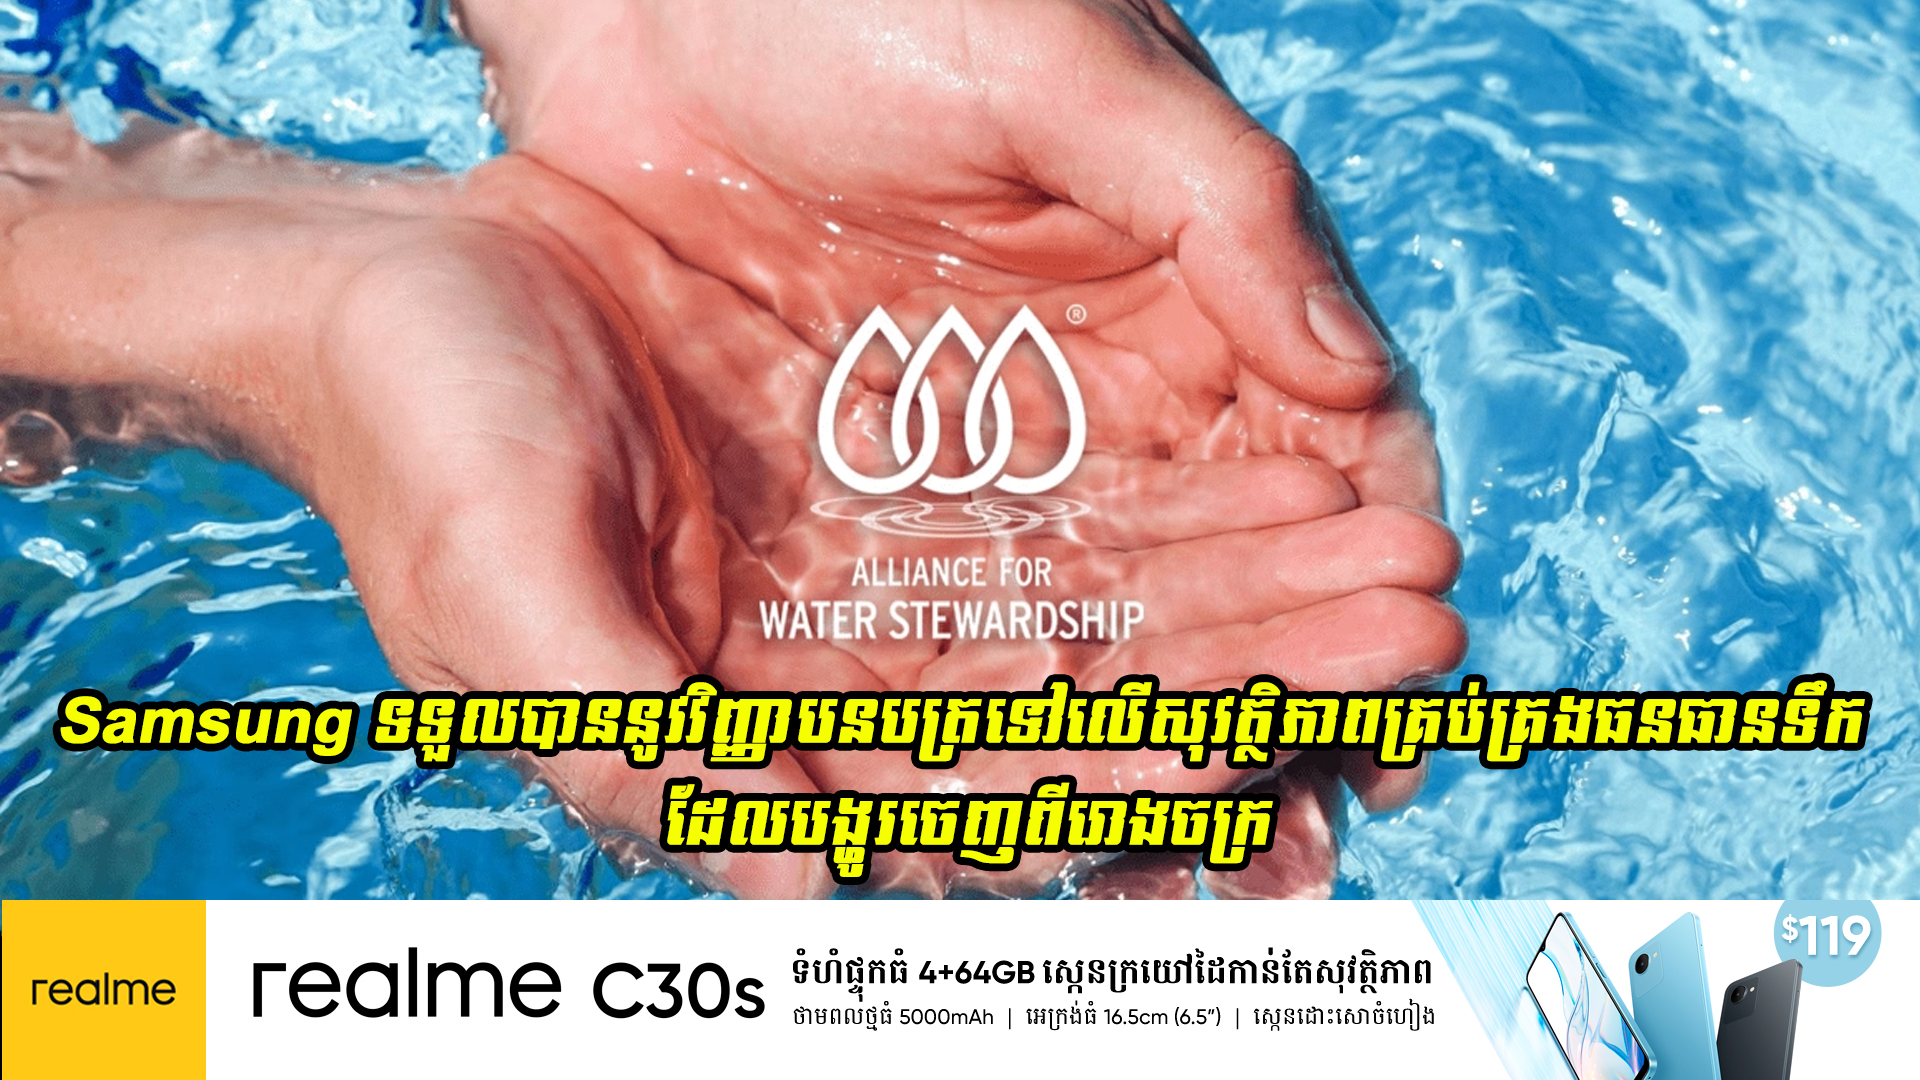 Samsung ទទួលបាននូវវិញ្ញាបនបត្រ Alliance for Water Stewardship លើការគ្រប់គ្រងទឹកដែលចេញពីរោងចក្រ